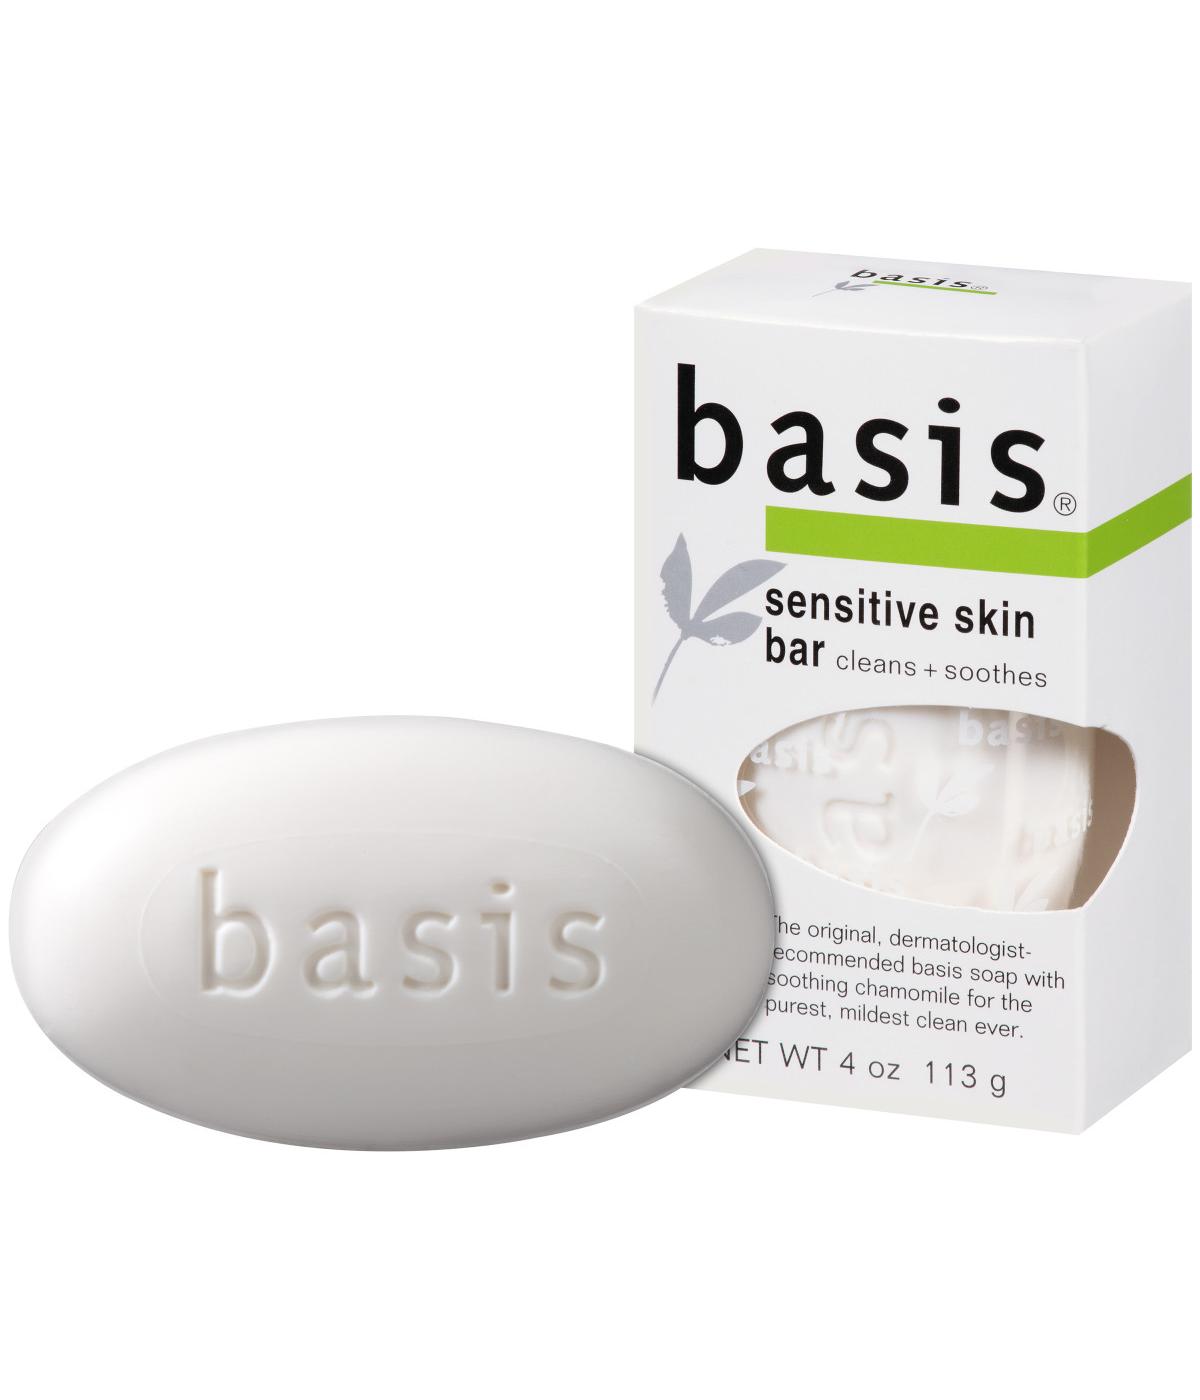 Basis Sensitive Skin Bar; image 1 of 3